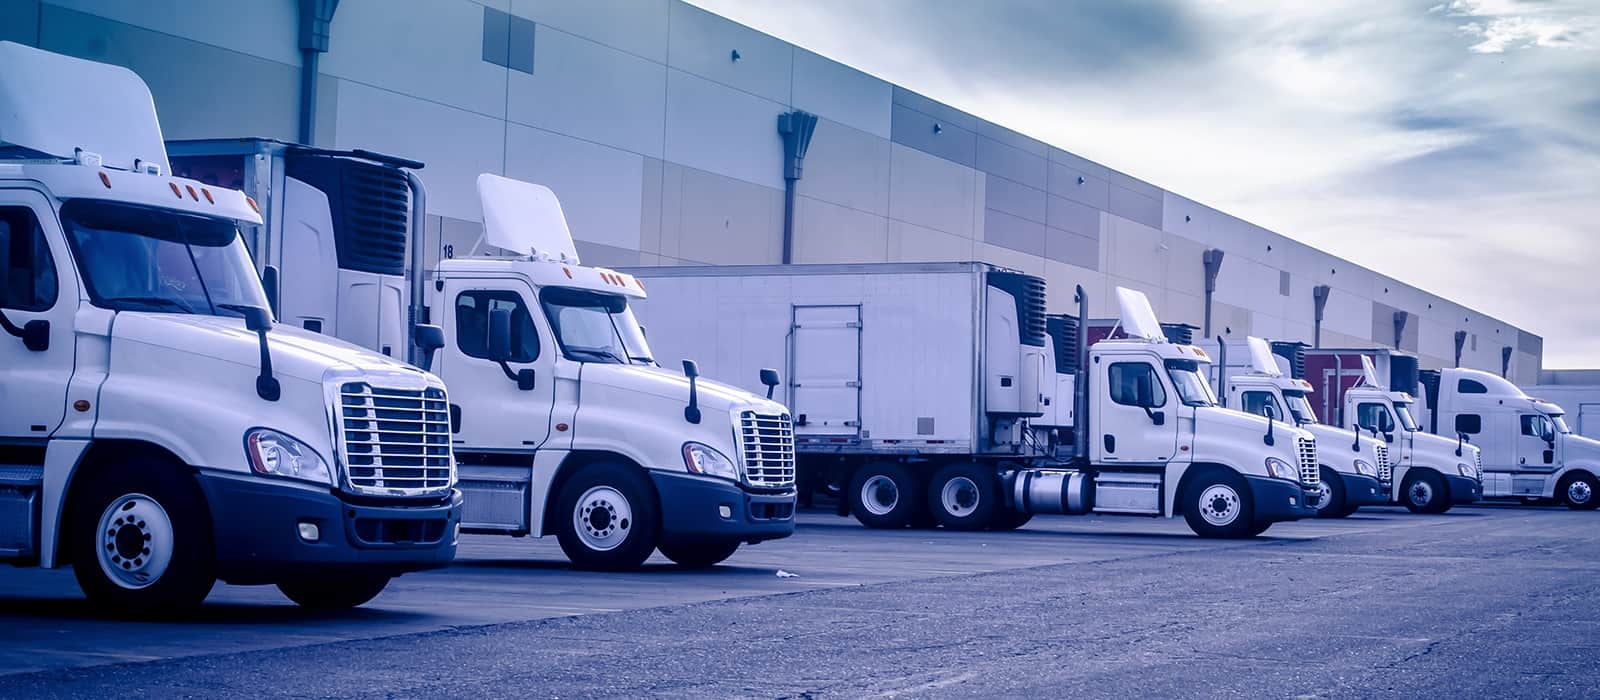 Ecommerce Distribution Truck Fleet Unloading | FW Logistics